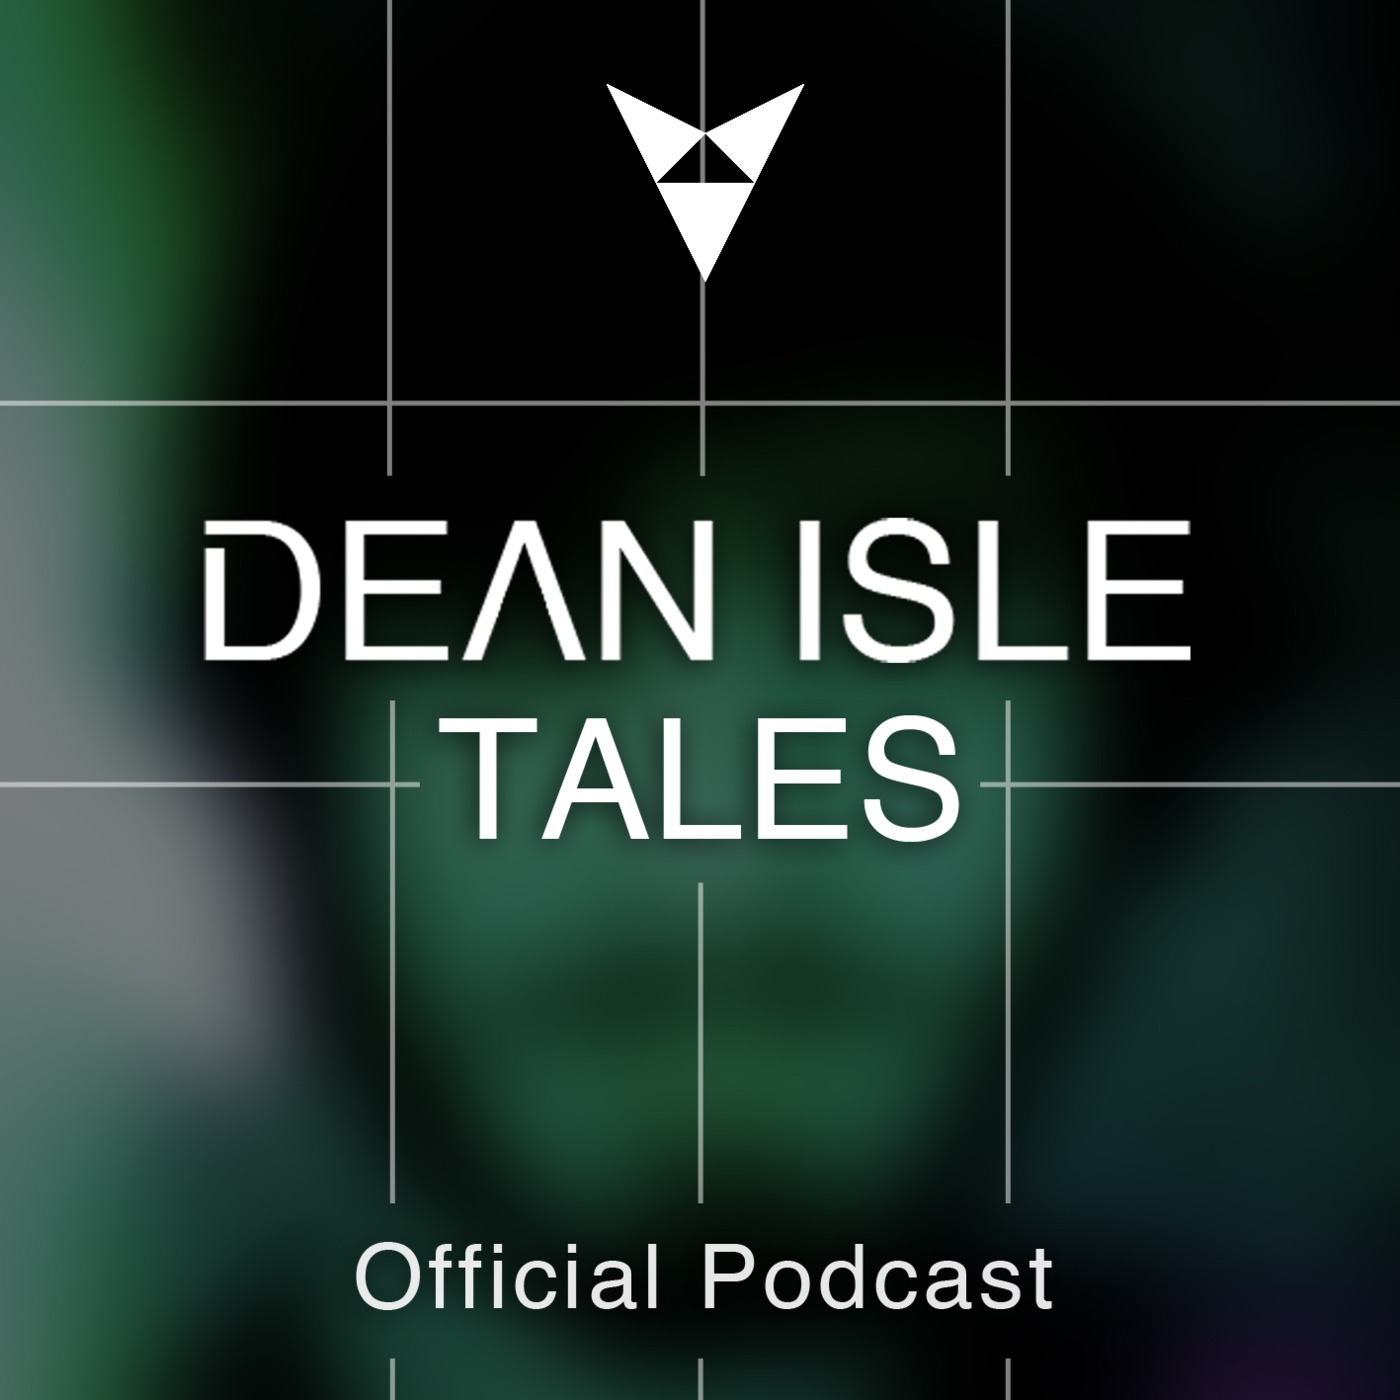 Dean Isle Tales